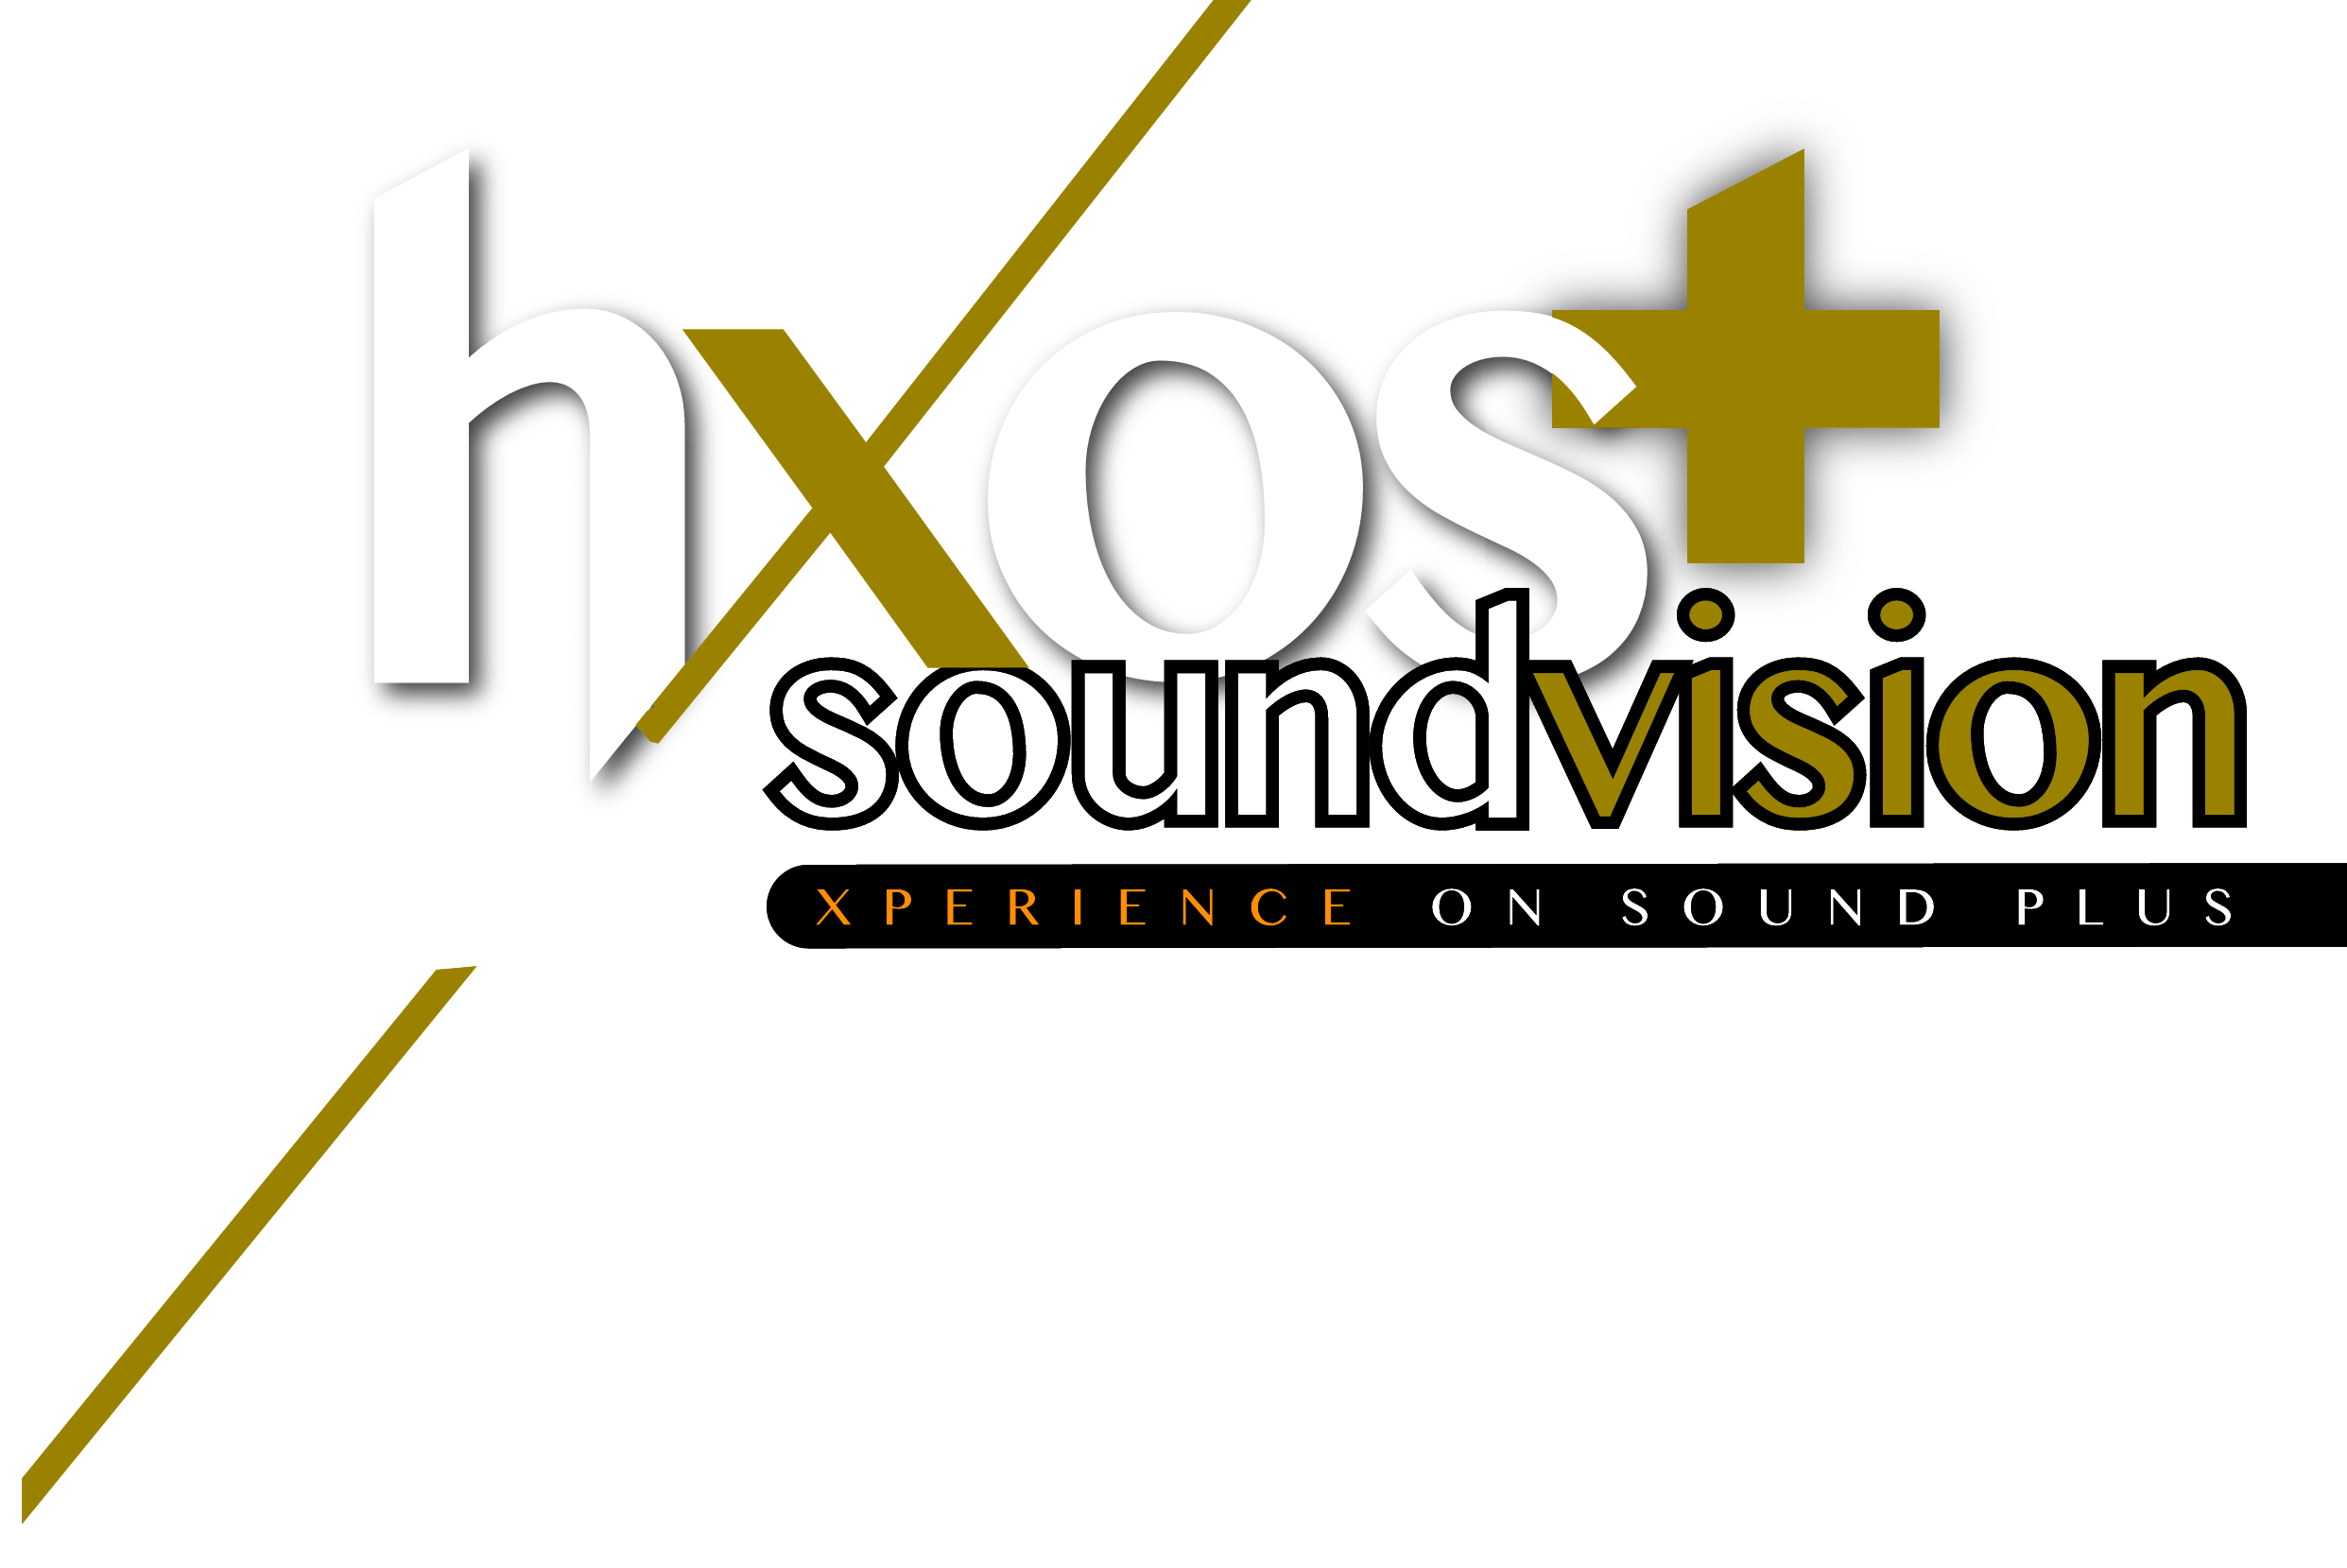 Hxos Plus logo